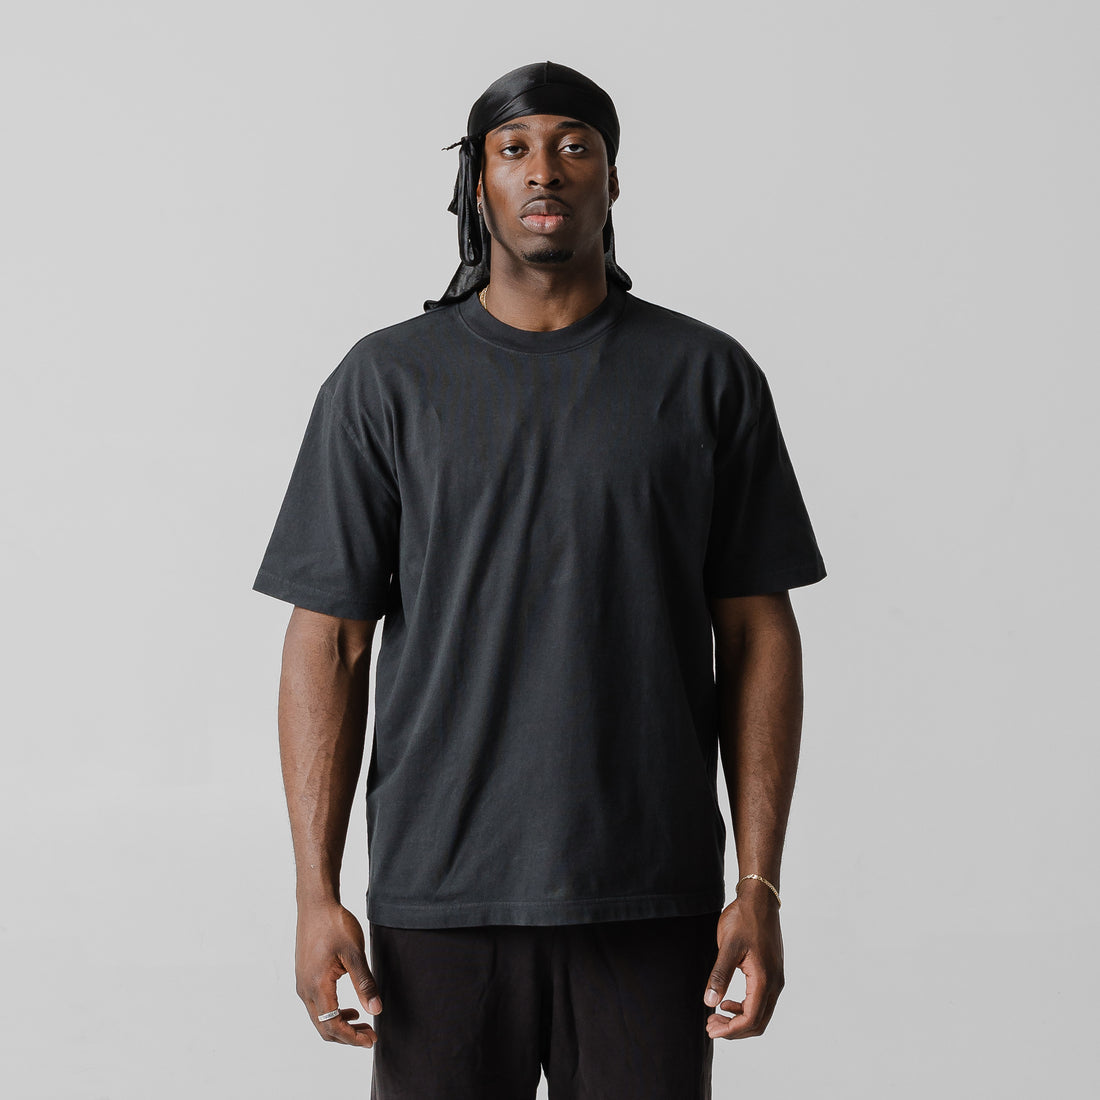 Yeezy Gap Unreleased Season T-Shirt Black